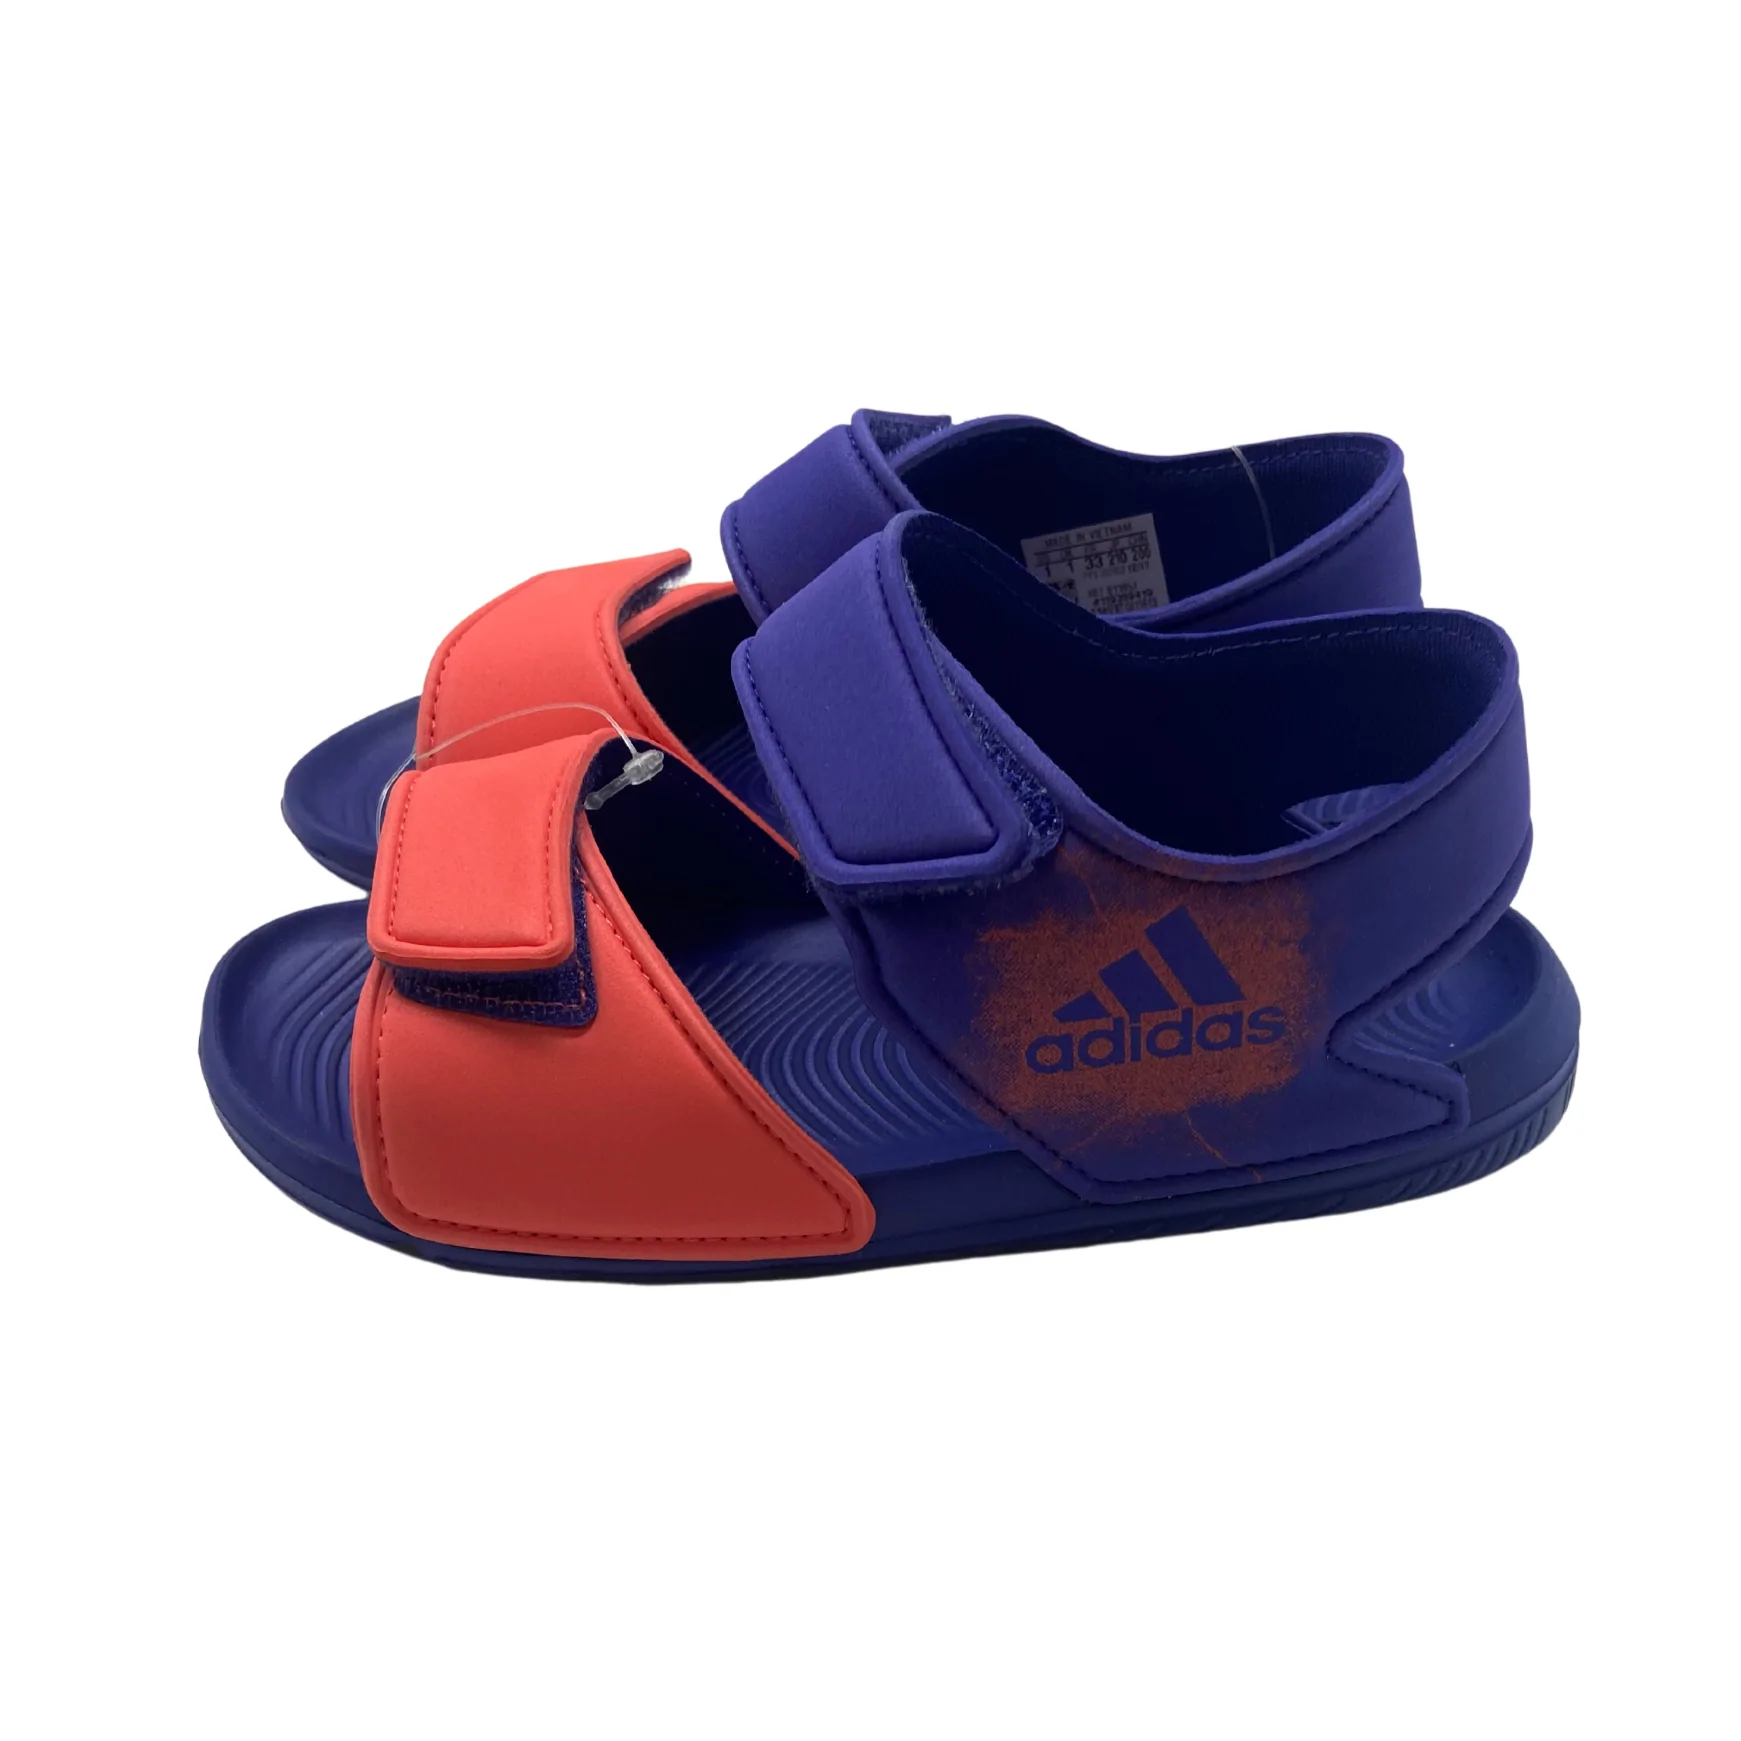 Adidas: Kids Sandals / AltaSwim C / Boy's / Girl's / Purple / Coral / Size 12